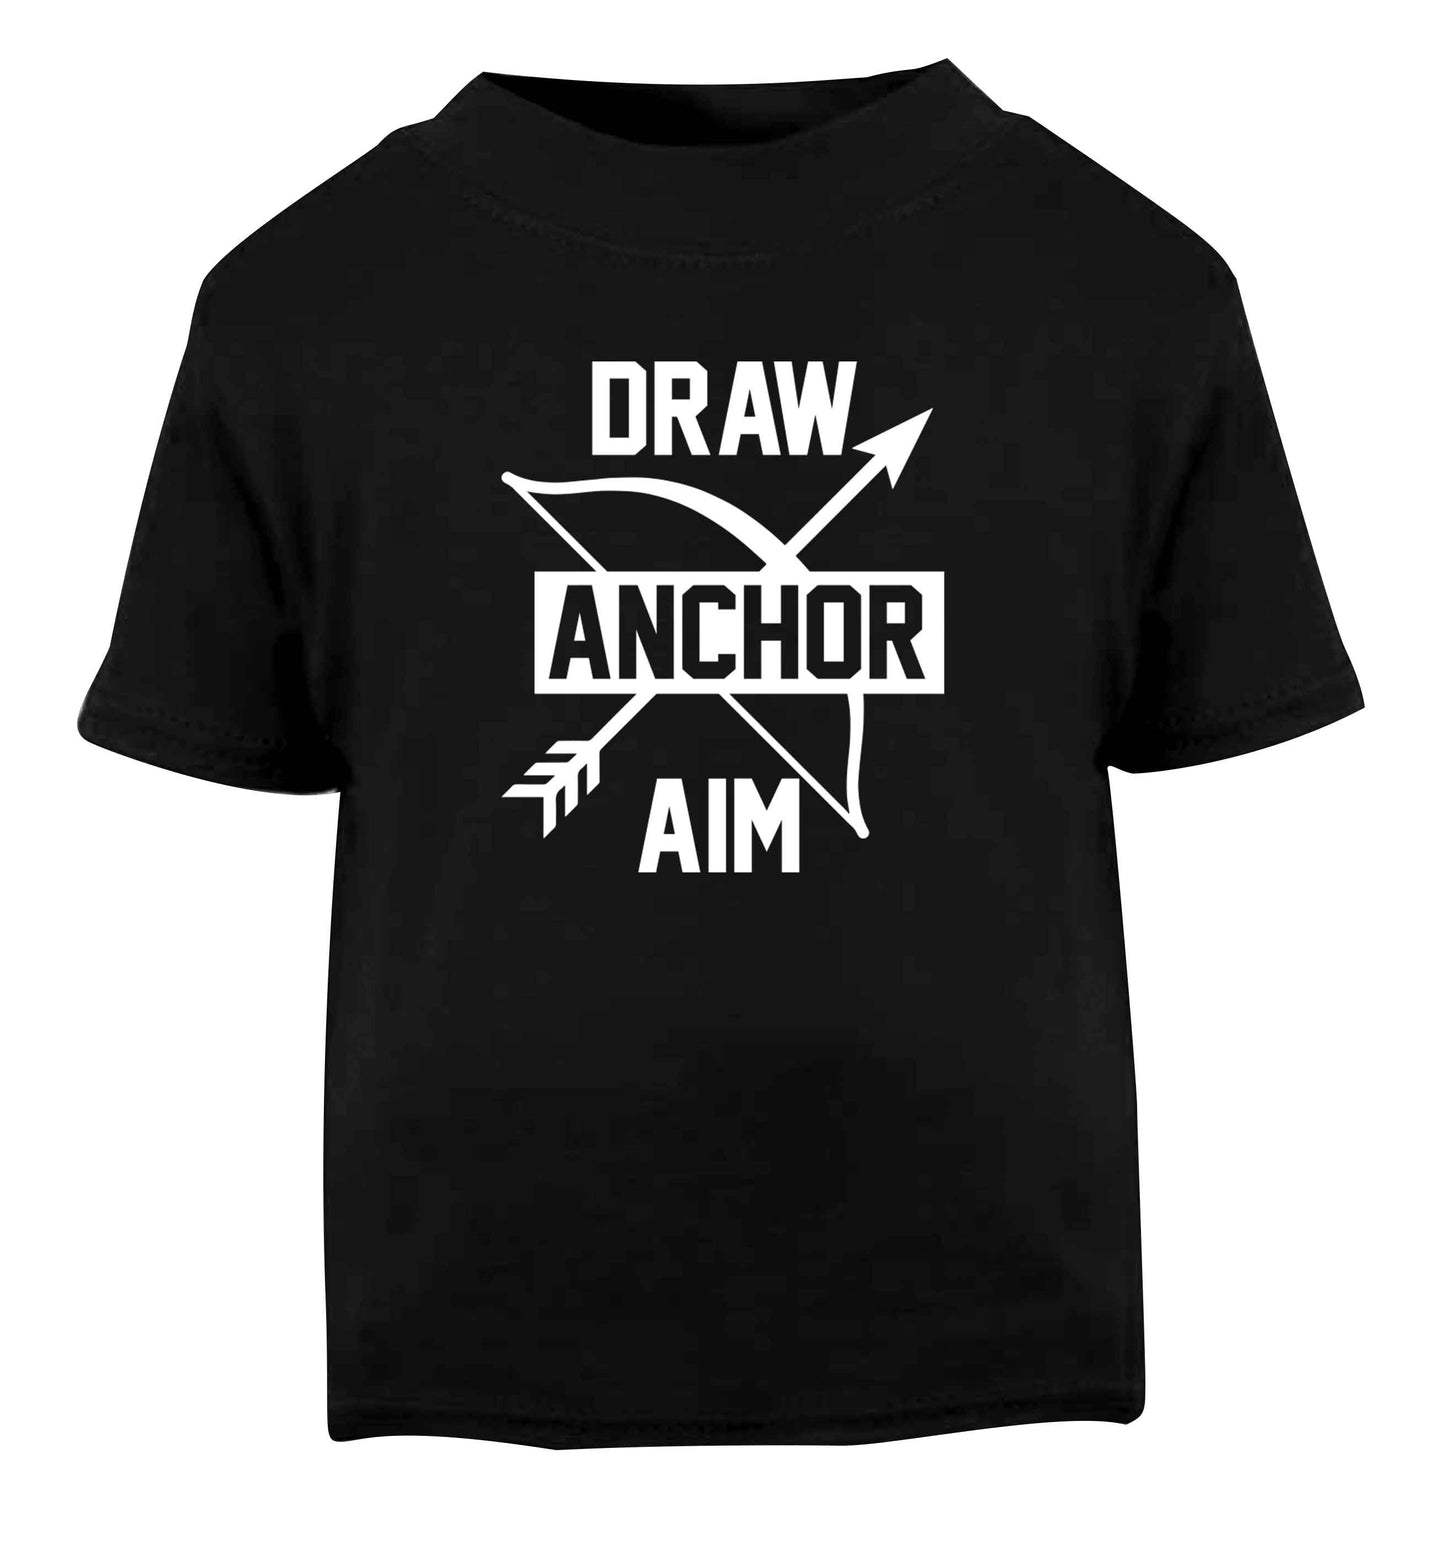 Draw anchor aim Black Baby Toddler Tshirt 2 years